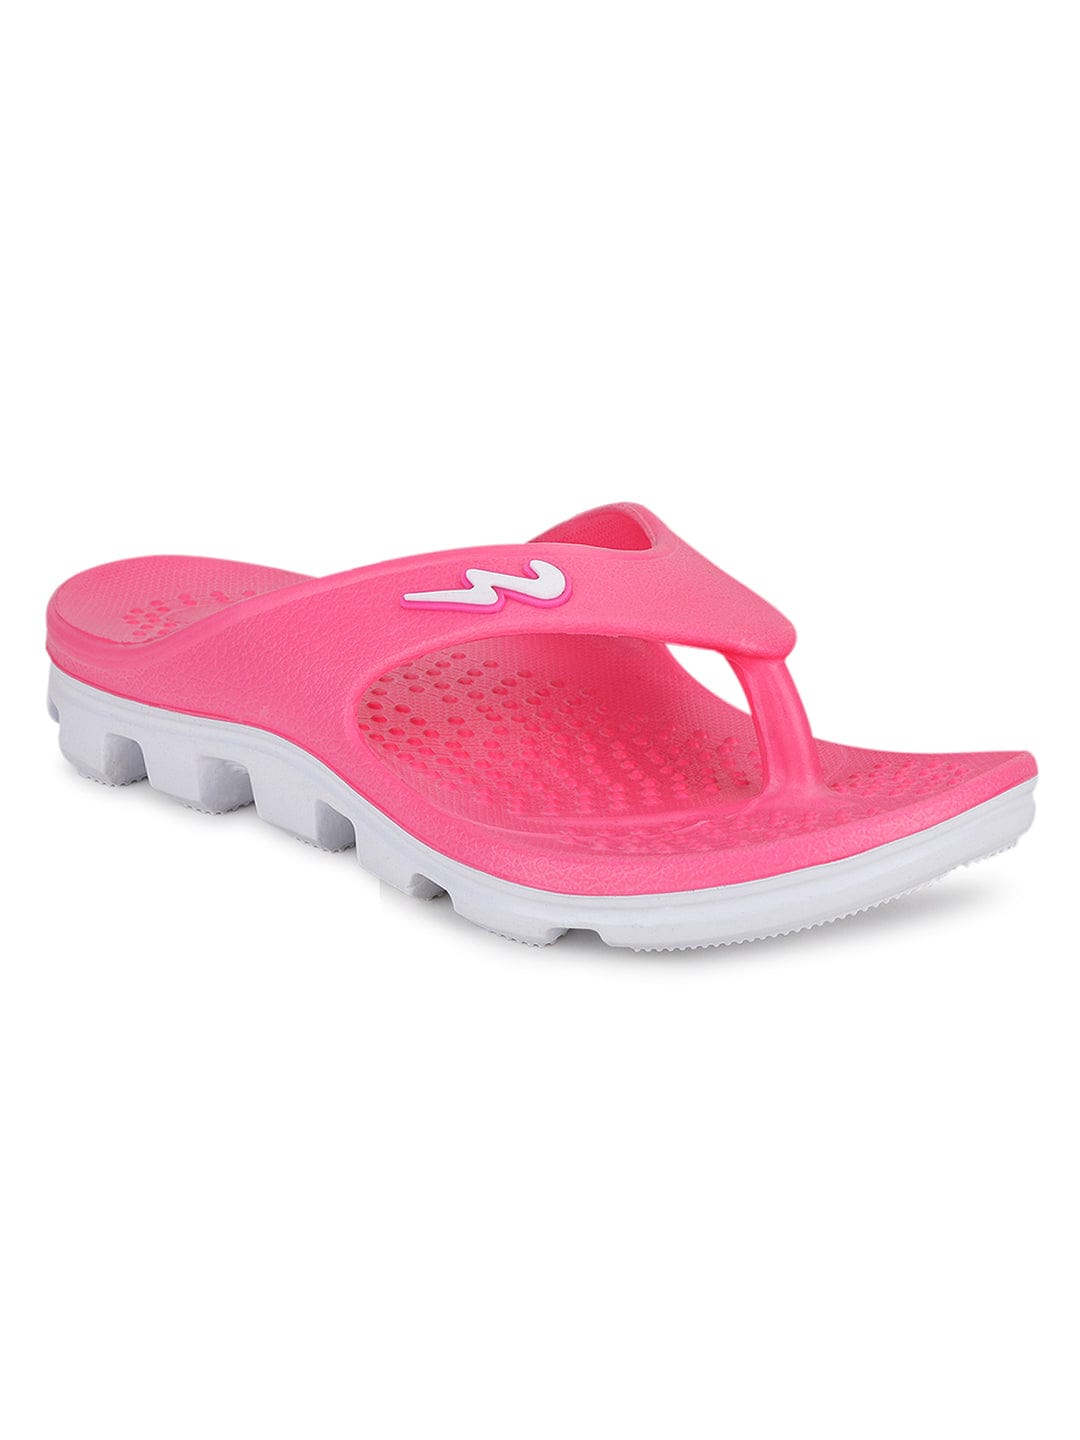 Buy Flip-Flop For Women: Flipbaby-Pink-Wht